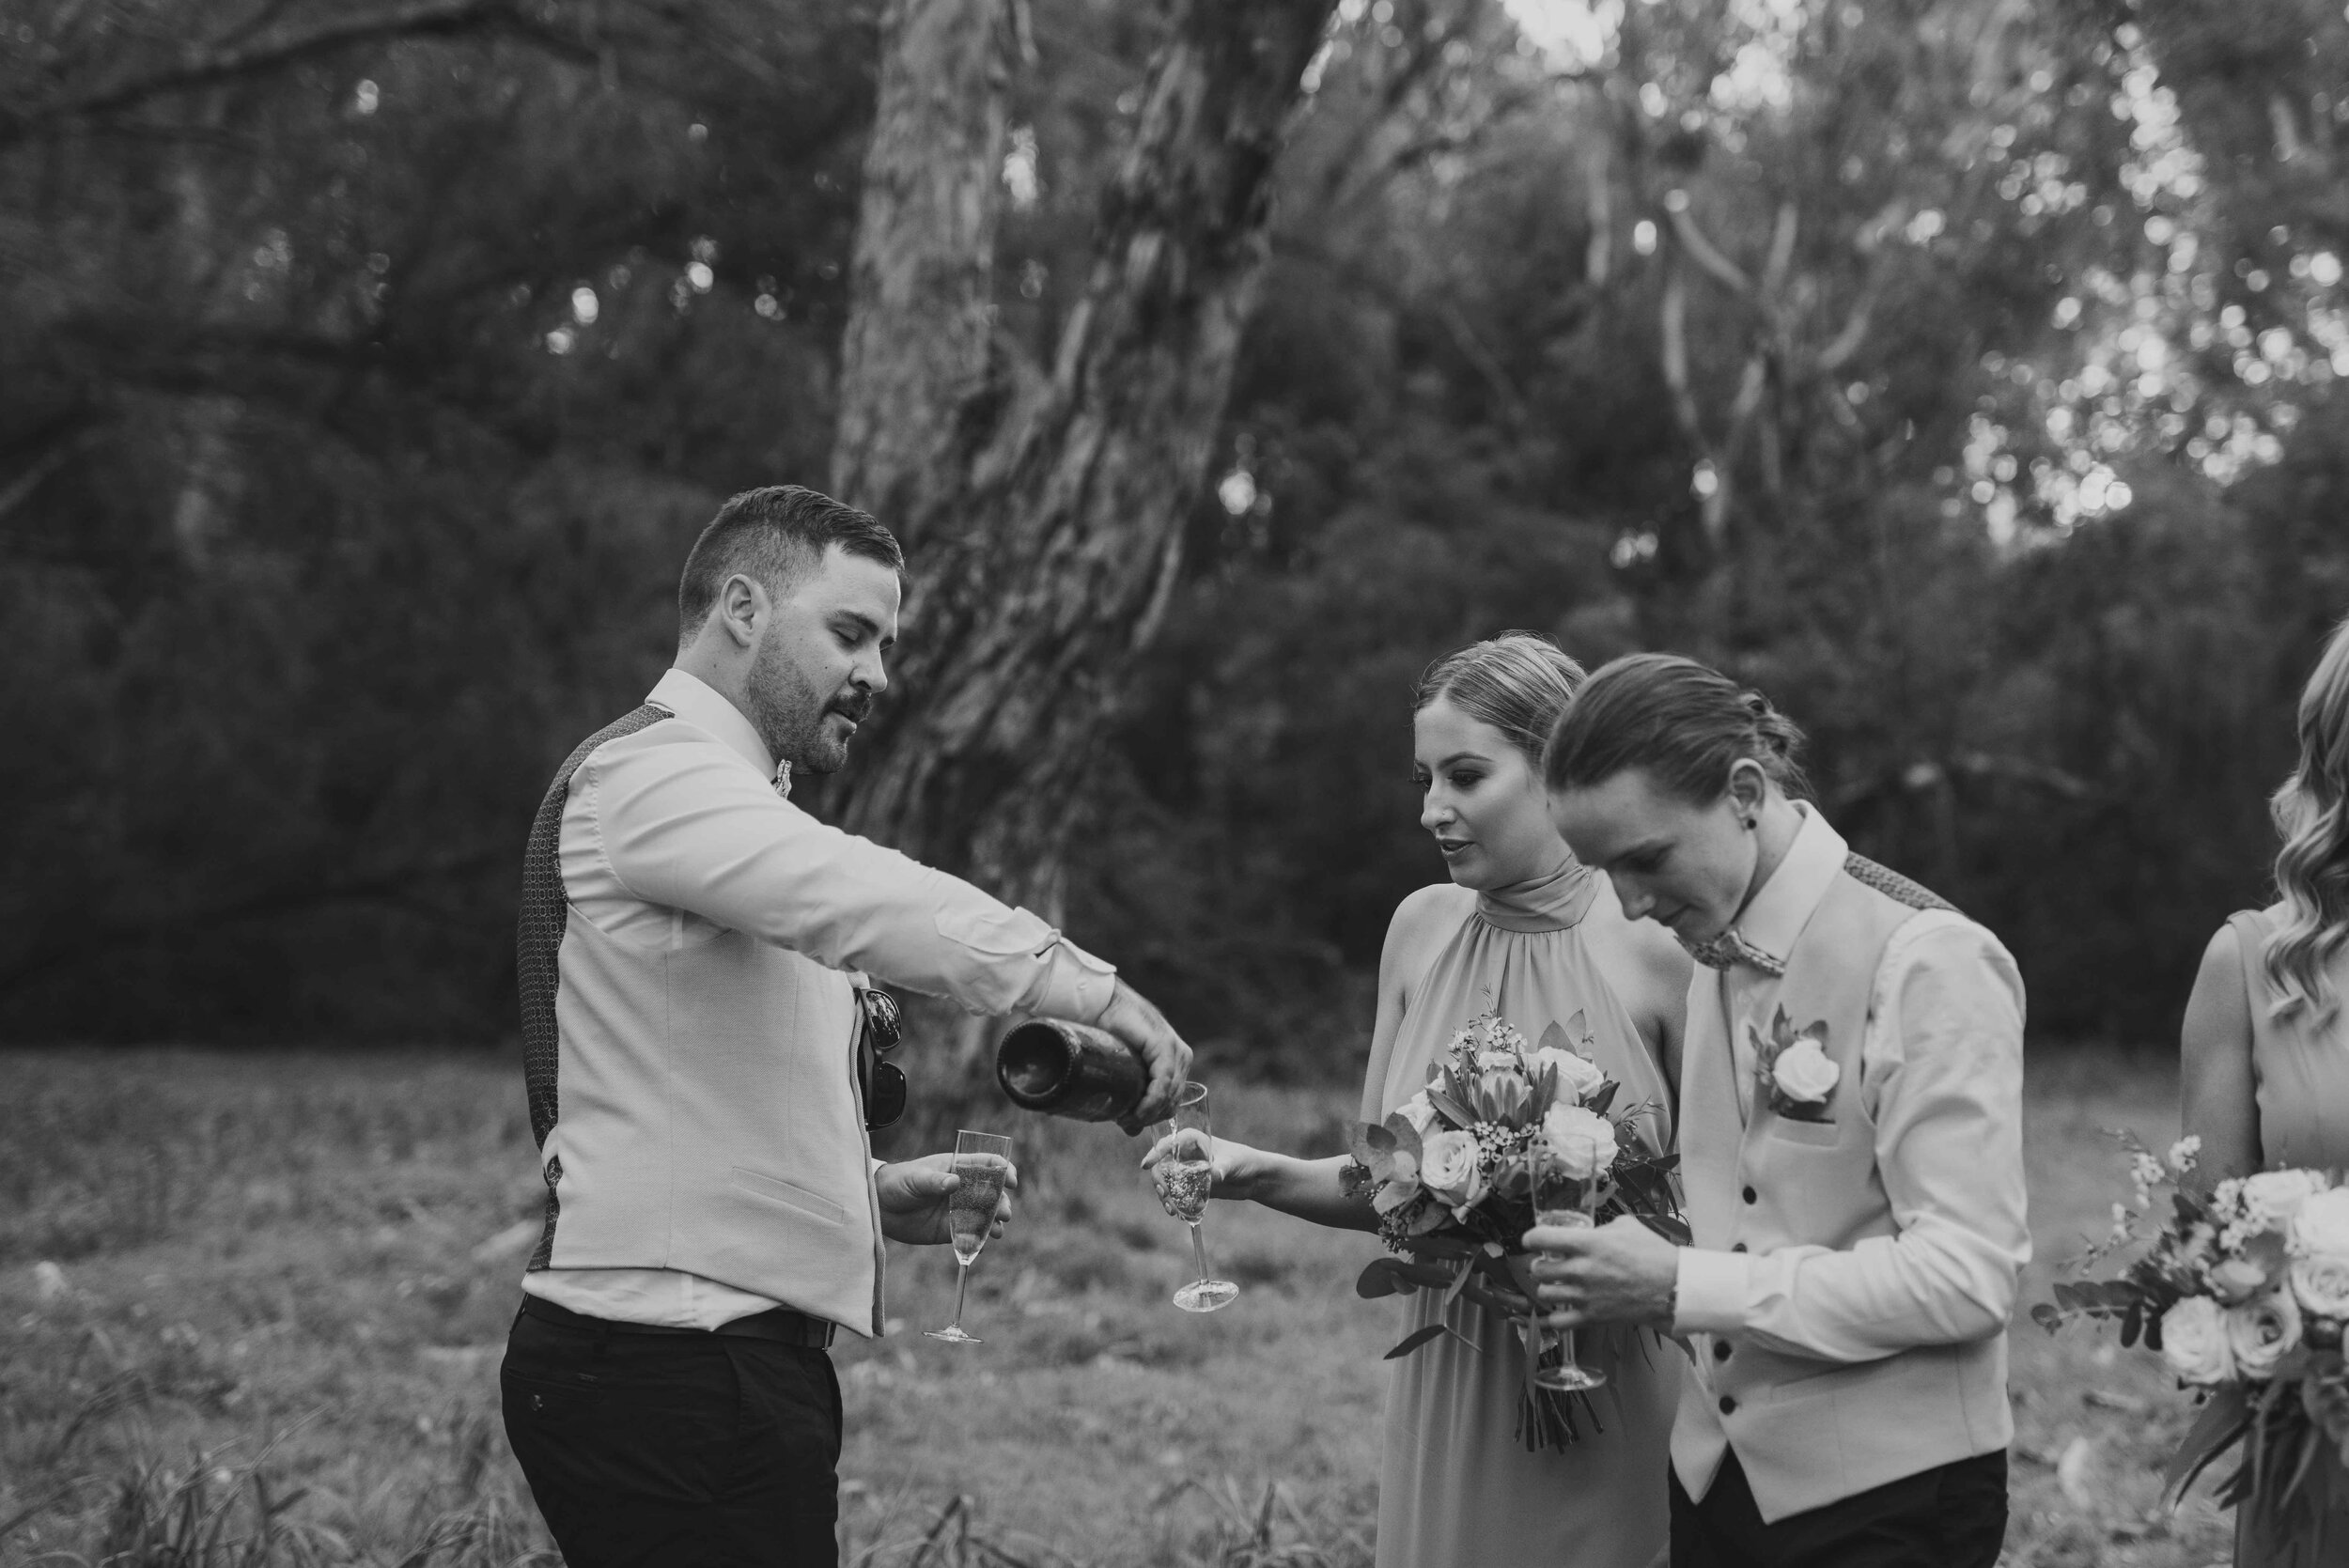 Yanchep park beautiful spring wedding | Perth wedding photographer Amy Skinner-617.jpg